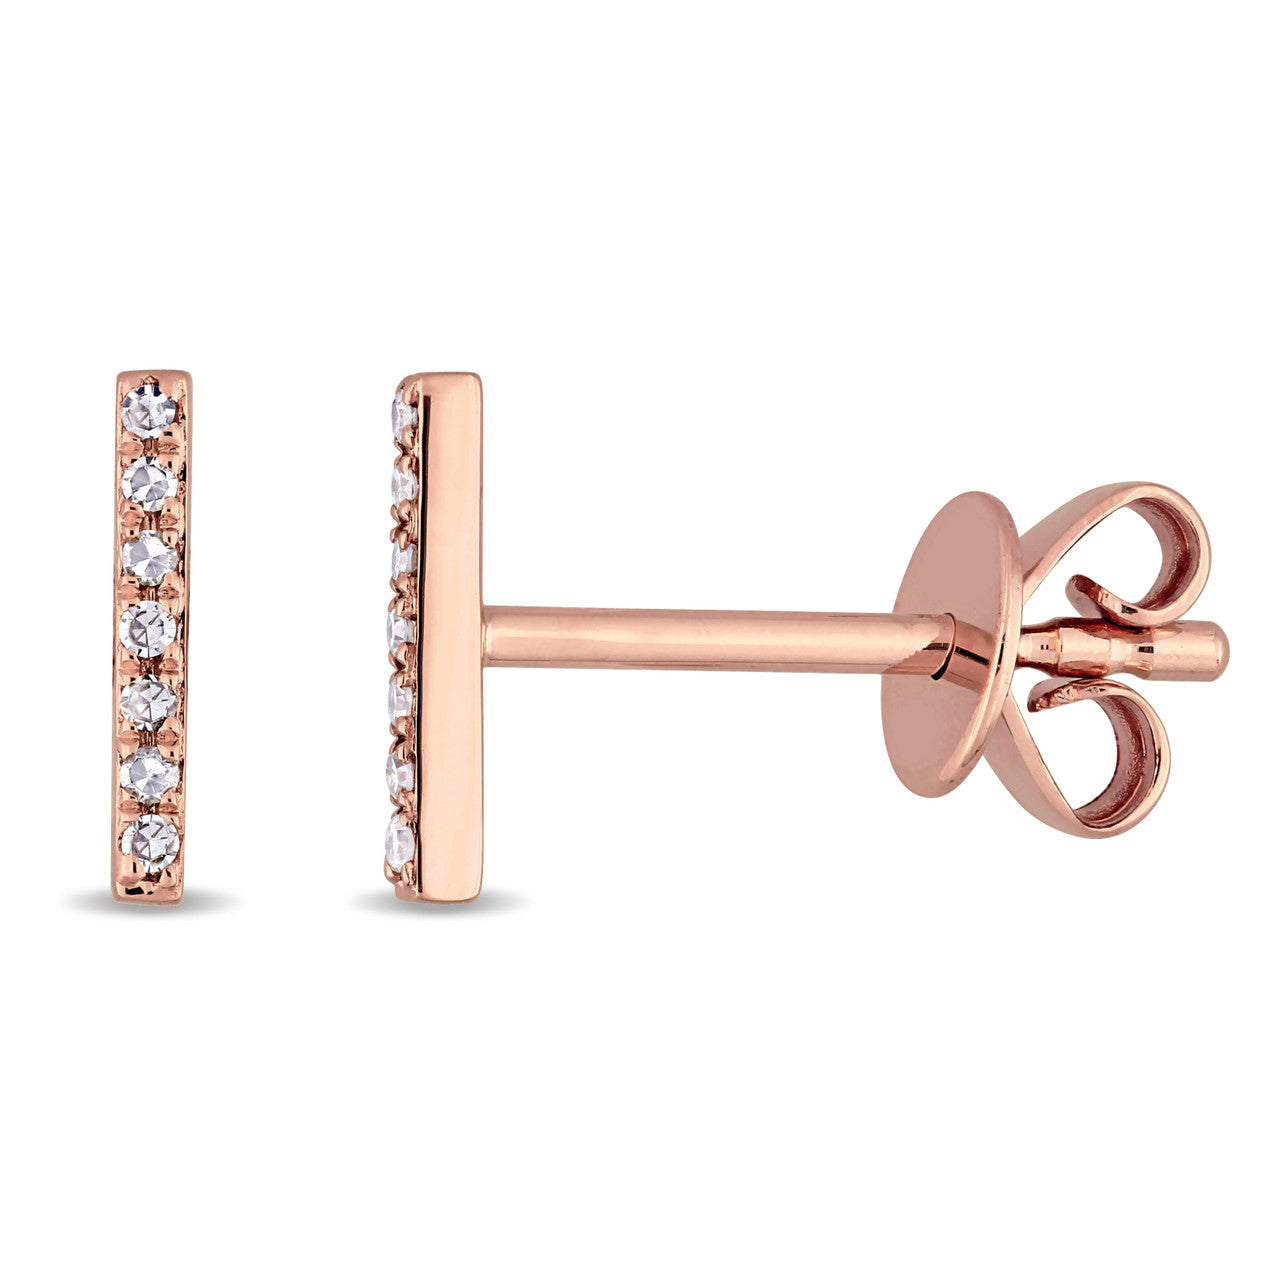 Ice Jewellery 0.05 CT Diamond Bar Post Earrings in 14k Pink Gold - 75000005659 | Ice Jewellery Australia